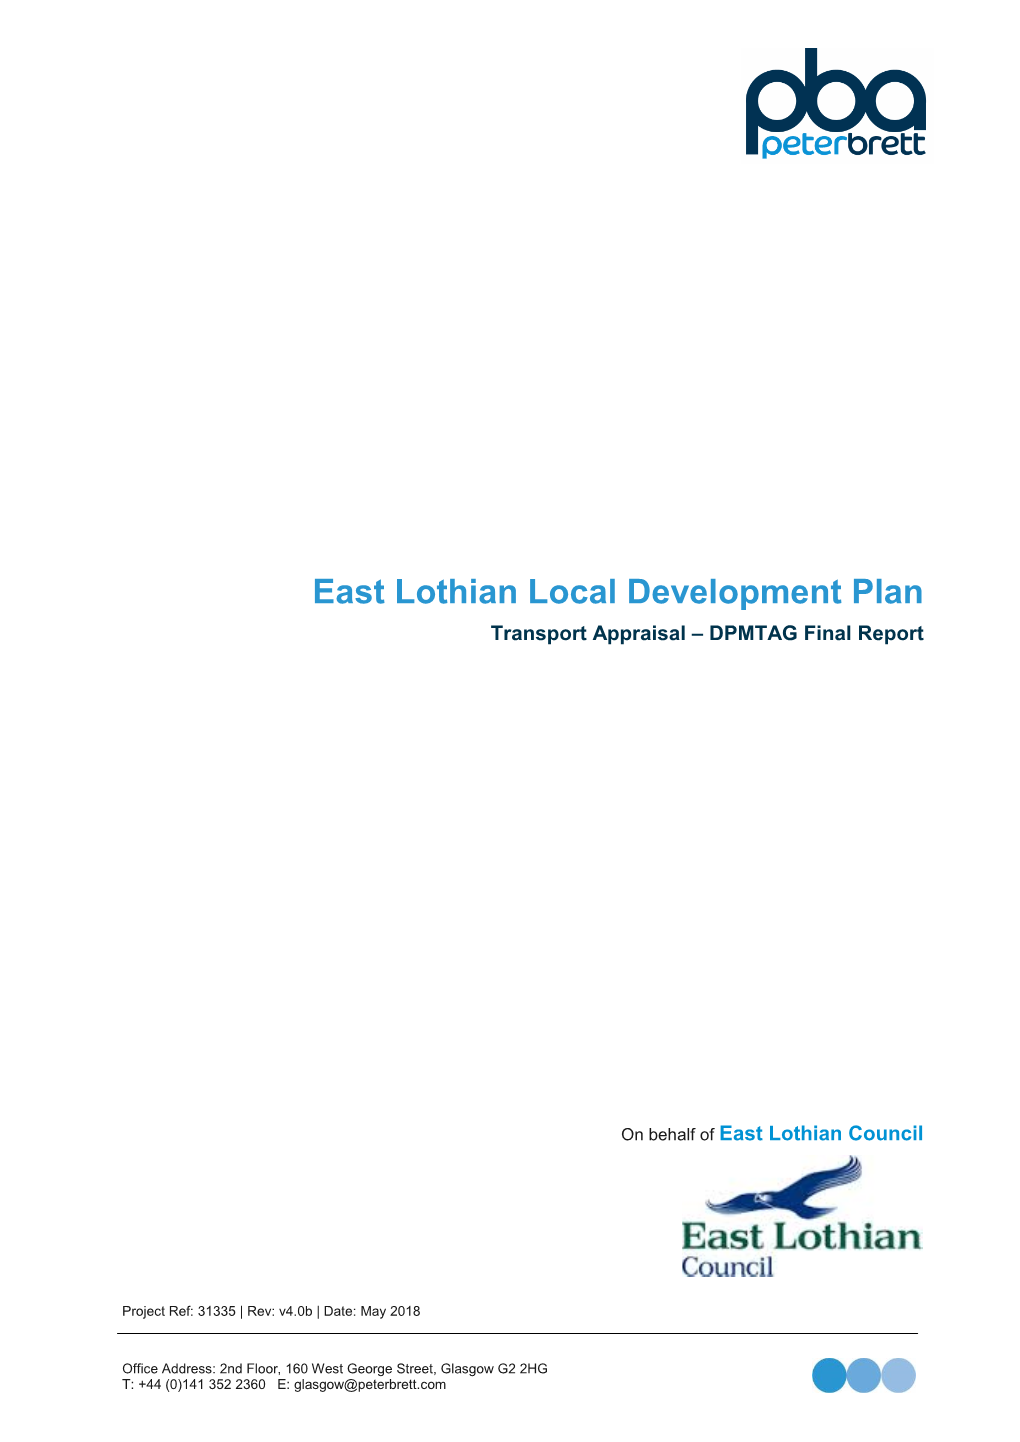 East Lothian Local Development Plan Transport Appraisal DPMTAG